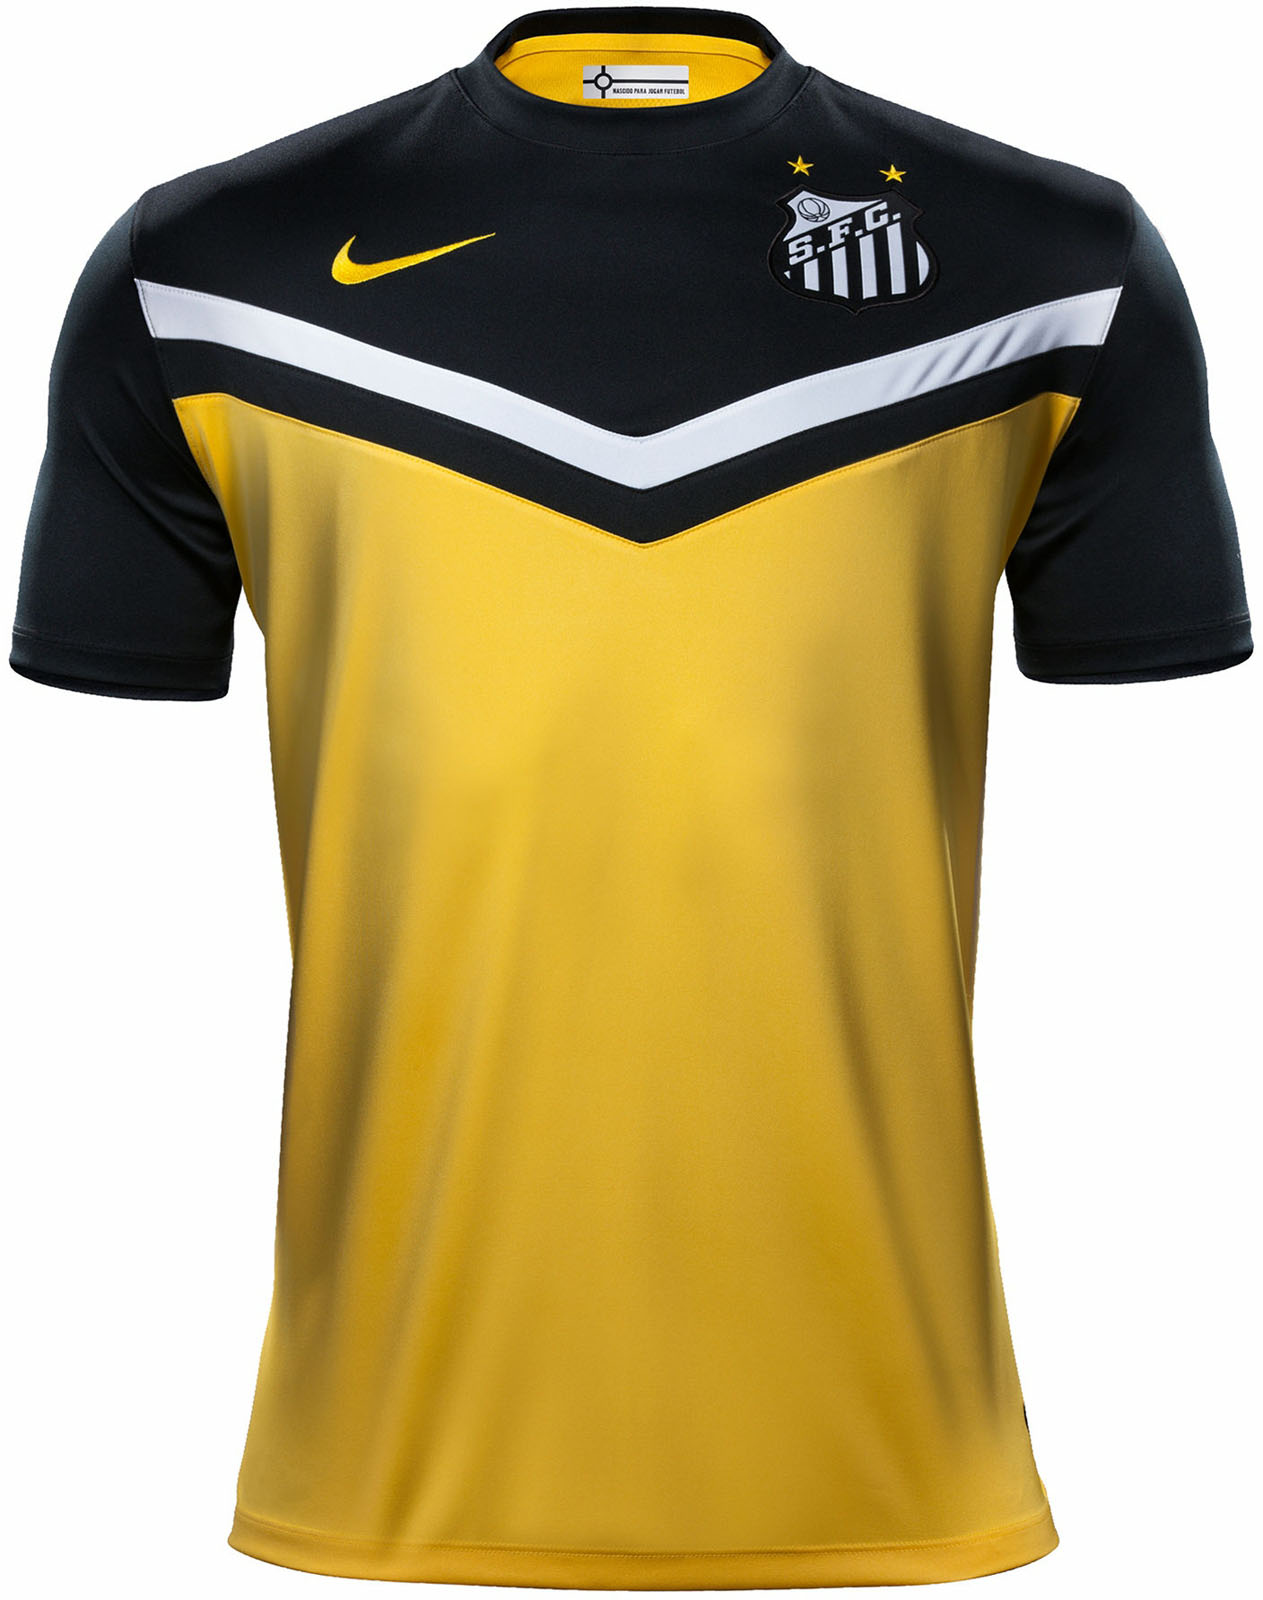 Nike Launch Yellow Third Kits for 5 Brazilian Clubs - Footy Headlines